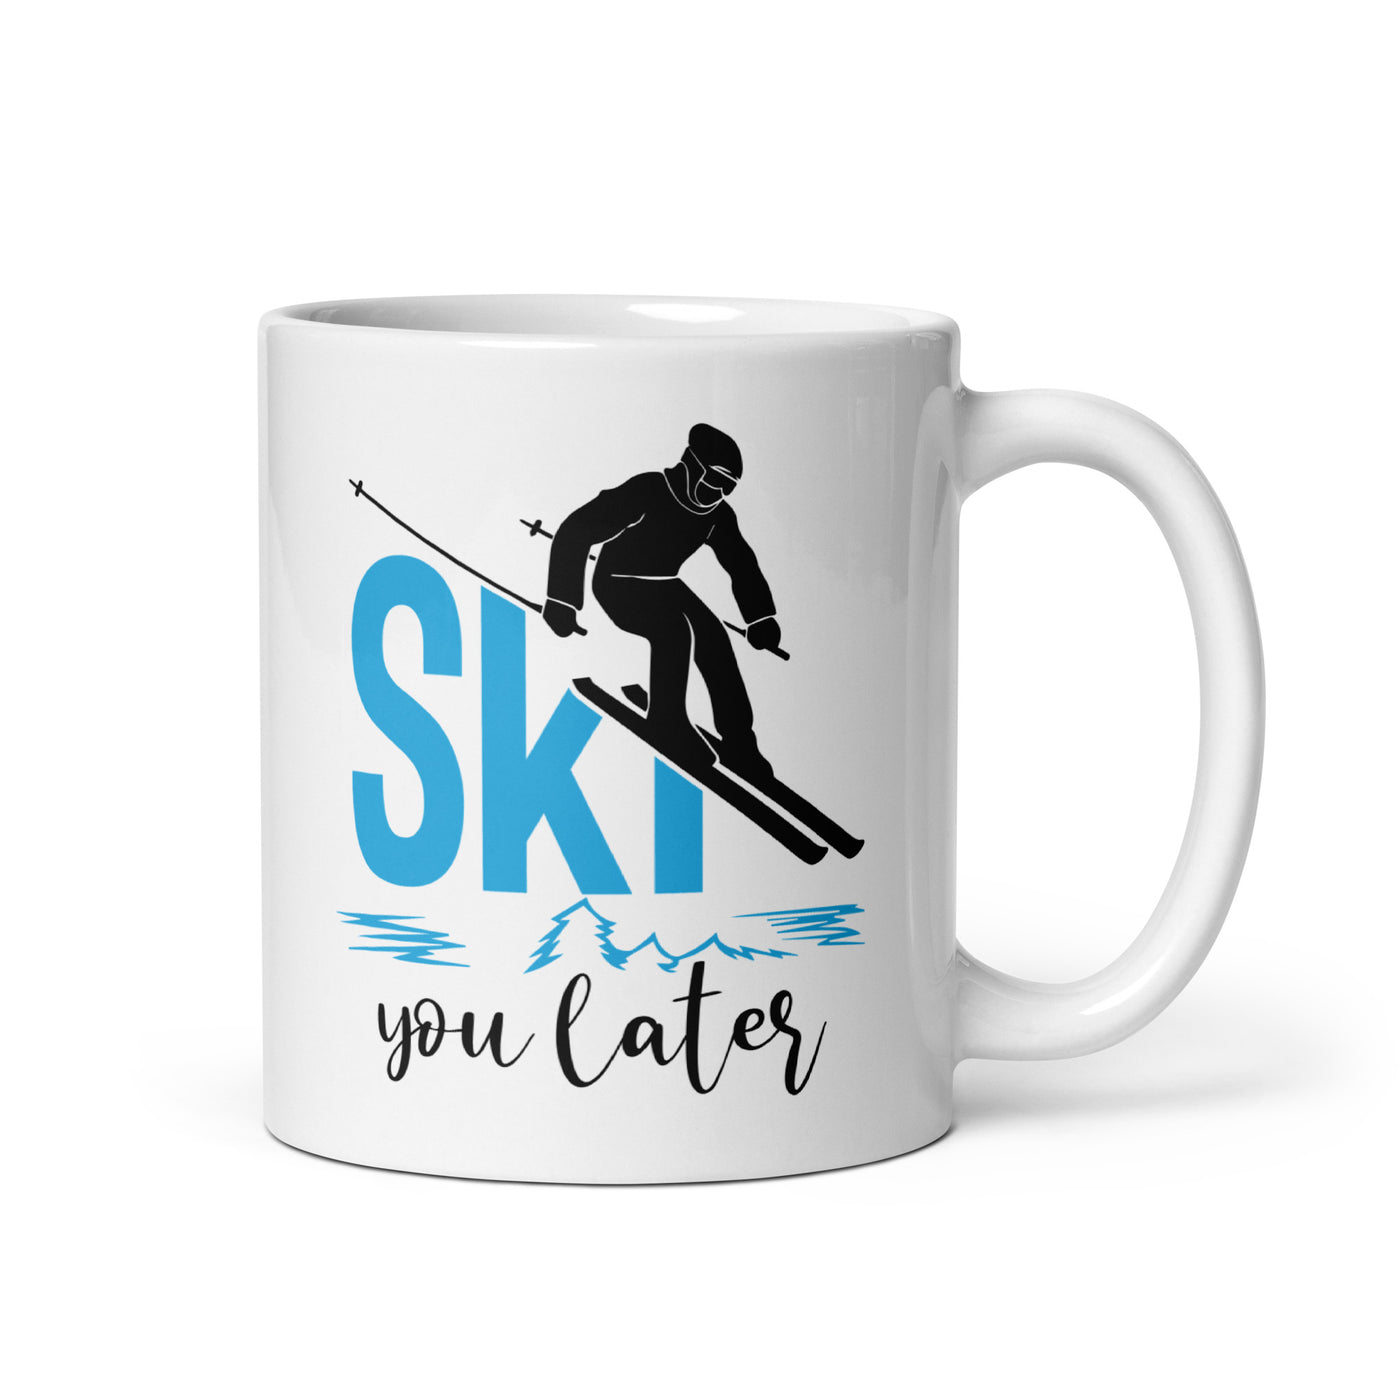 Ski You Later - (S.K) - Tasse klettern